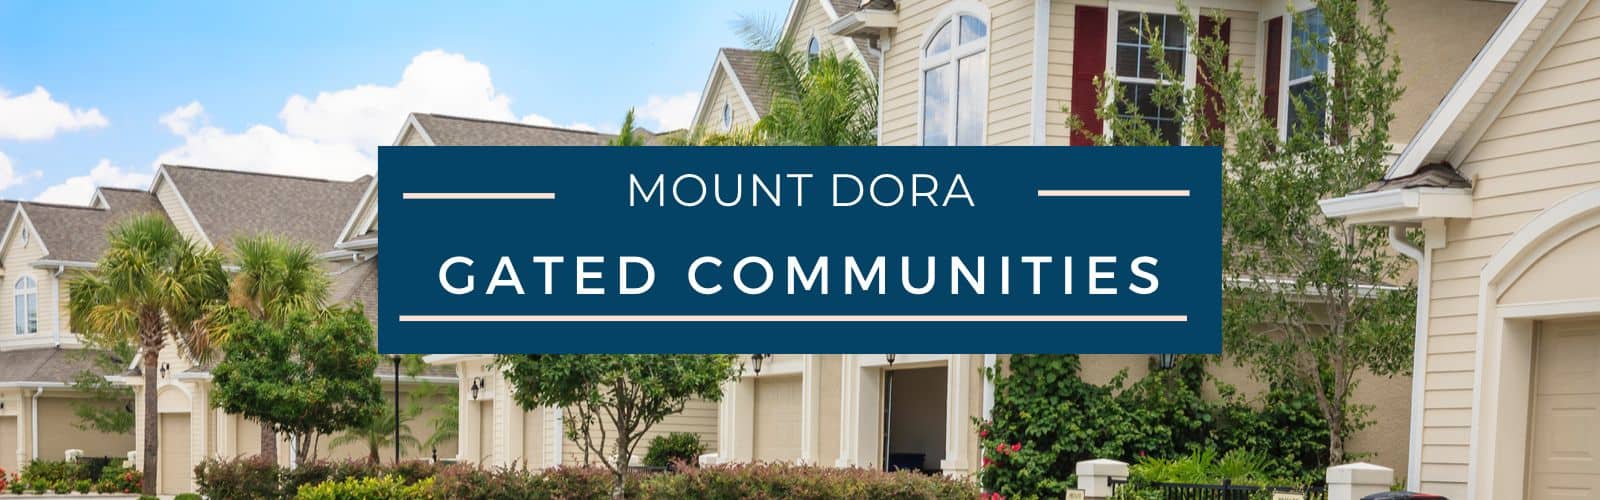 Mount Dora Gated Communities